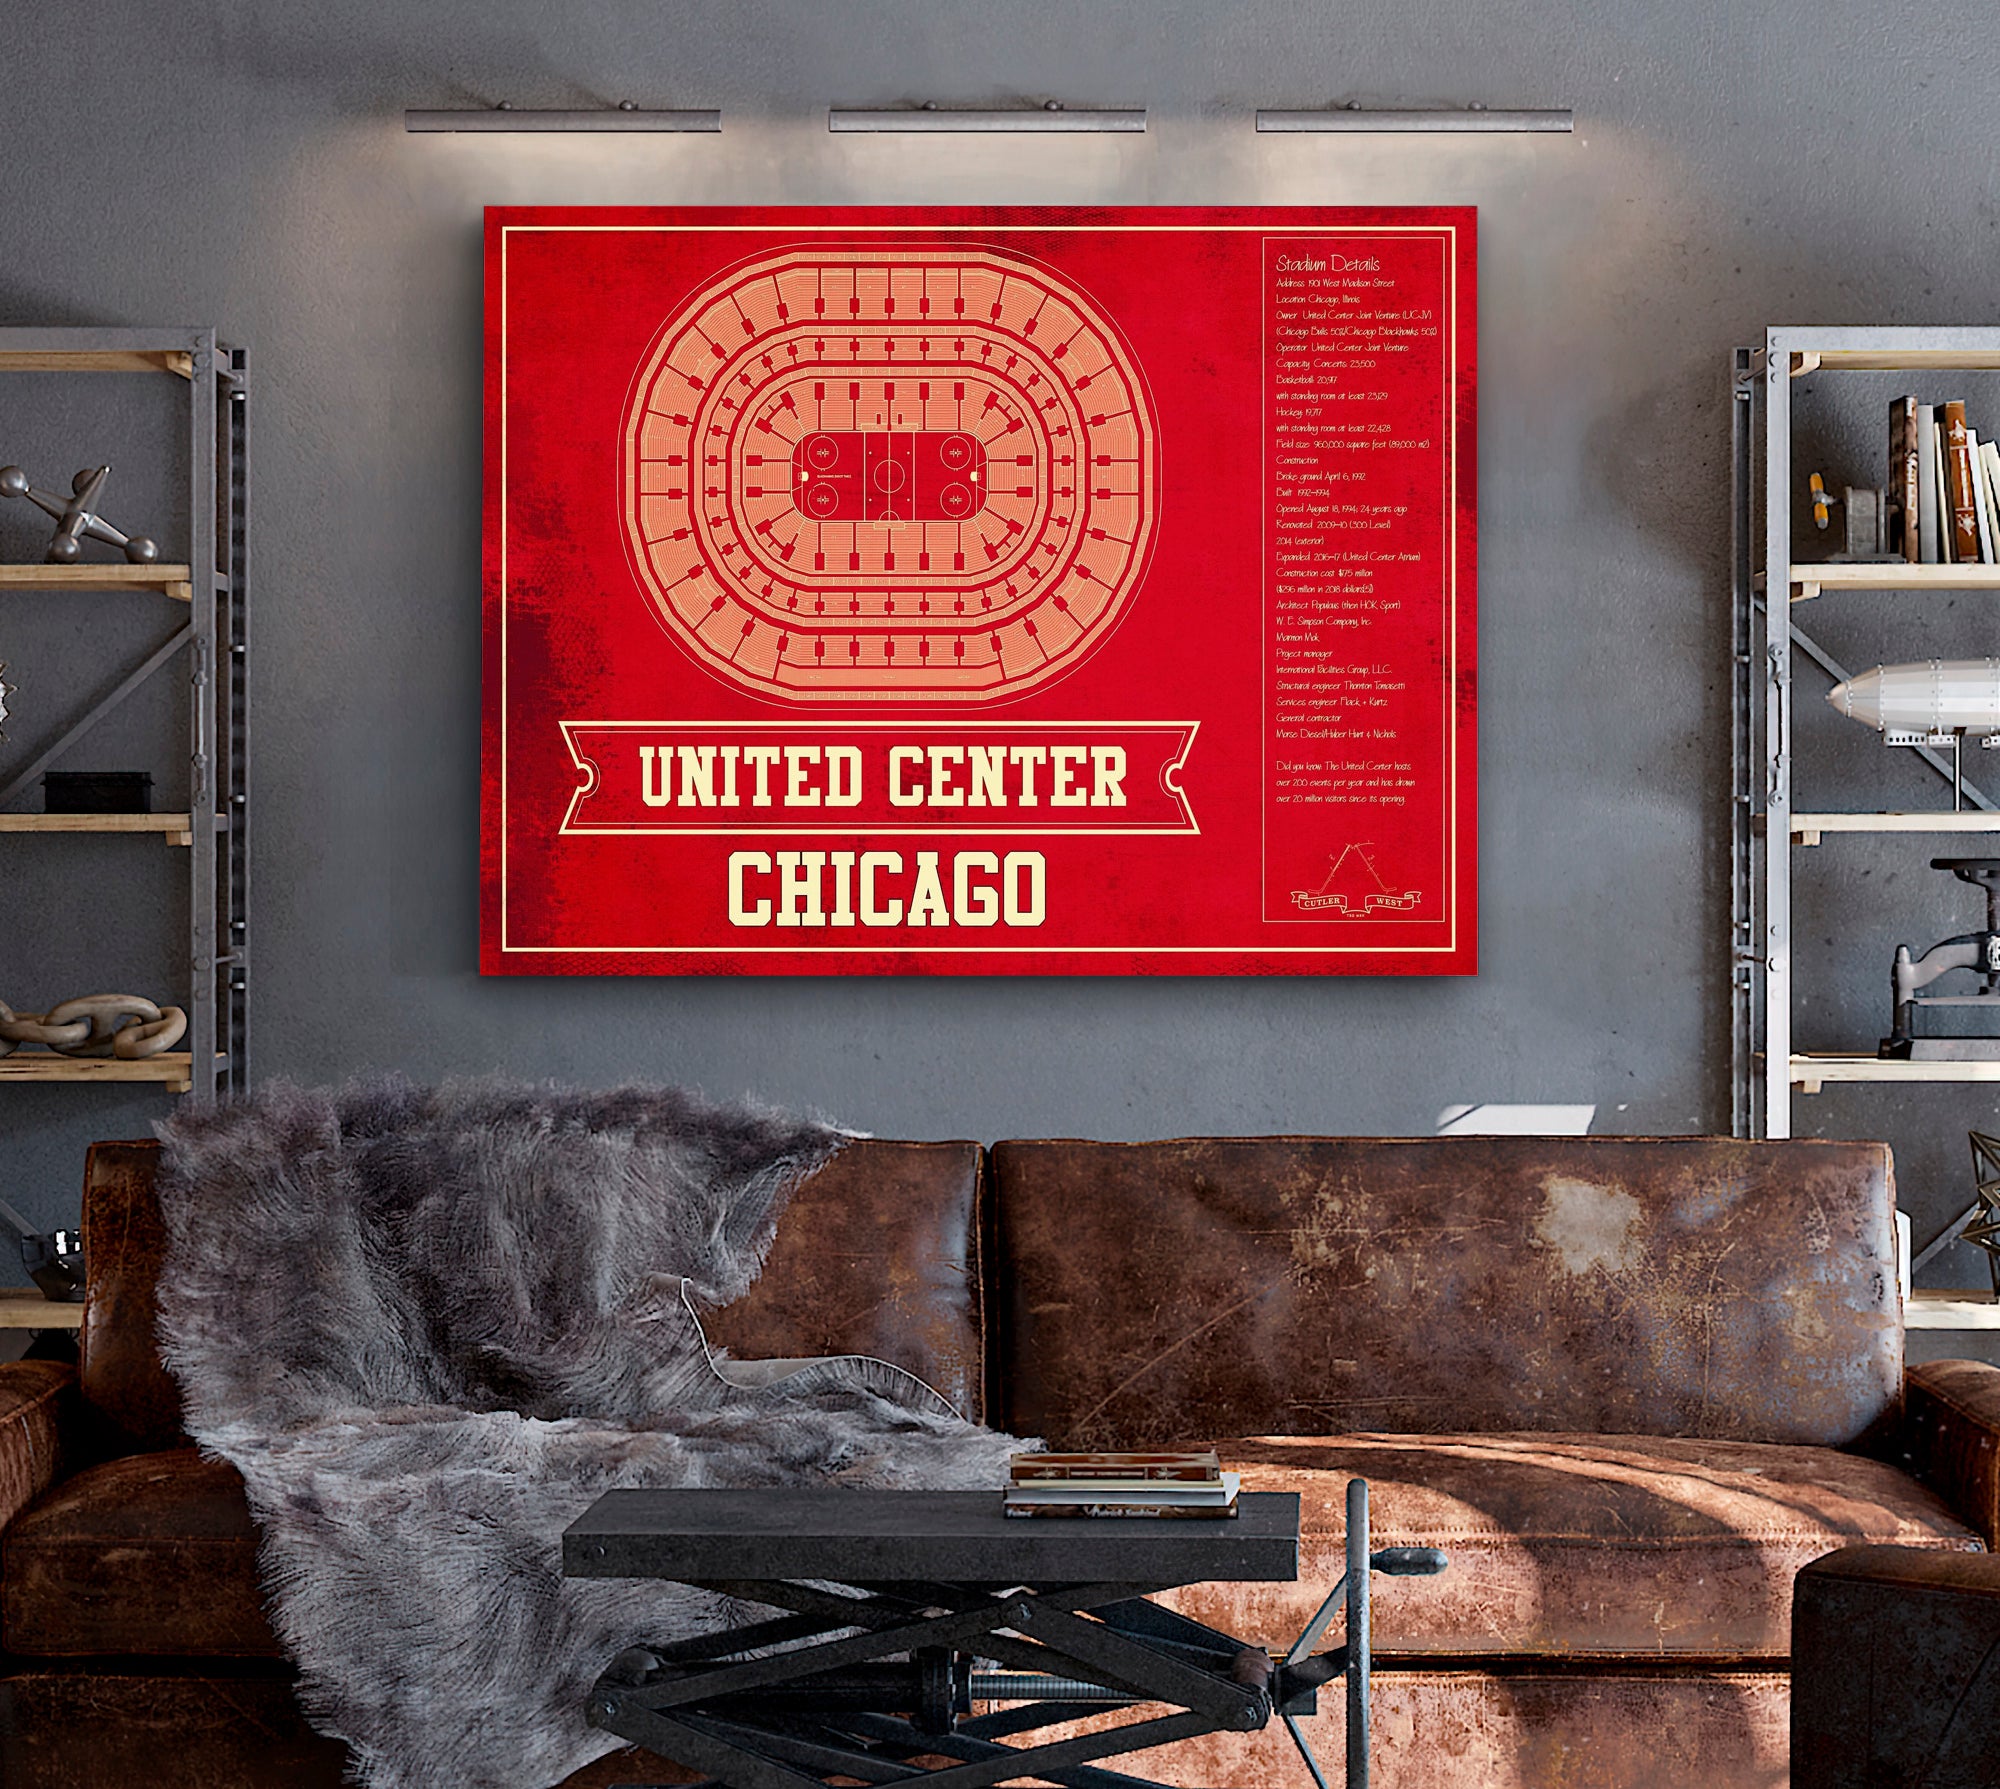 Chicago Blackhawks Team Colors - United Center Vintage Hockey Blueprint NHL Print